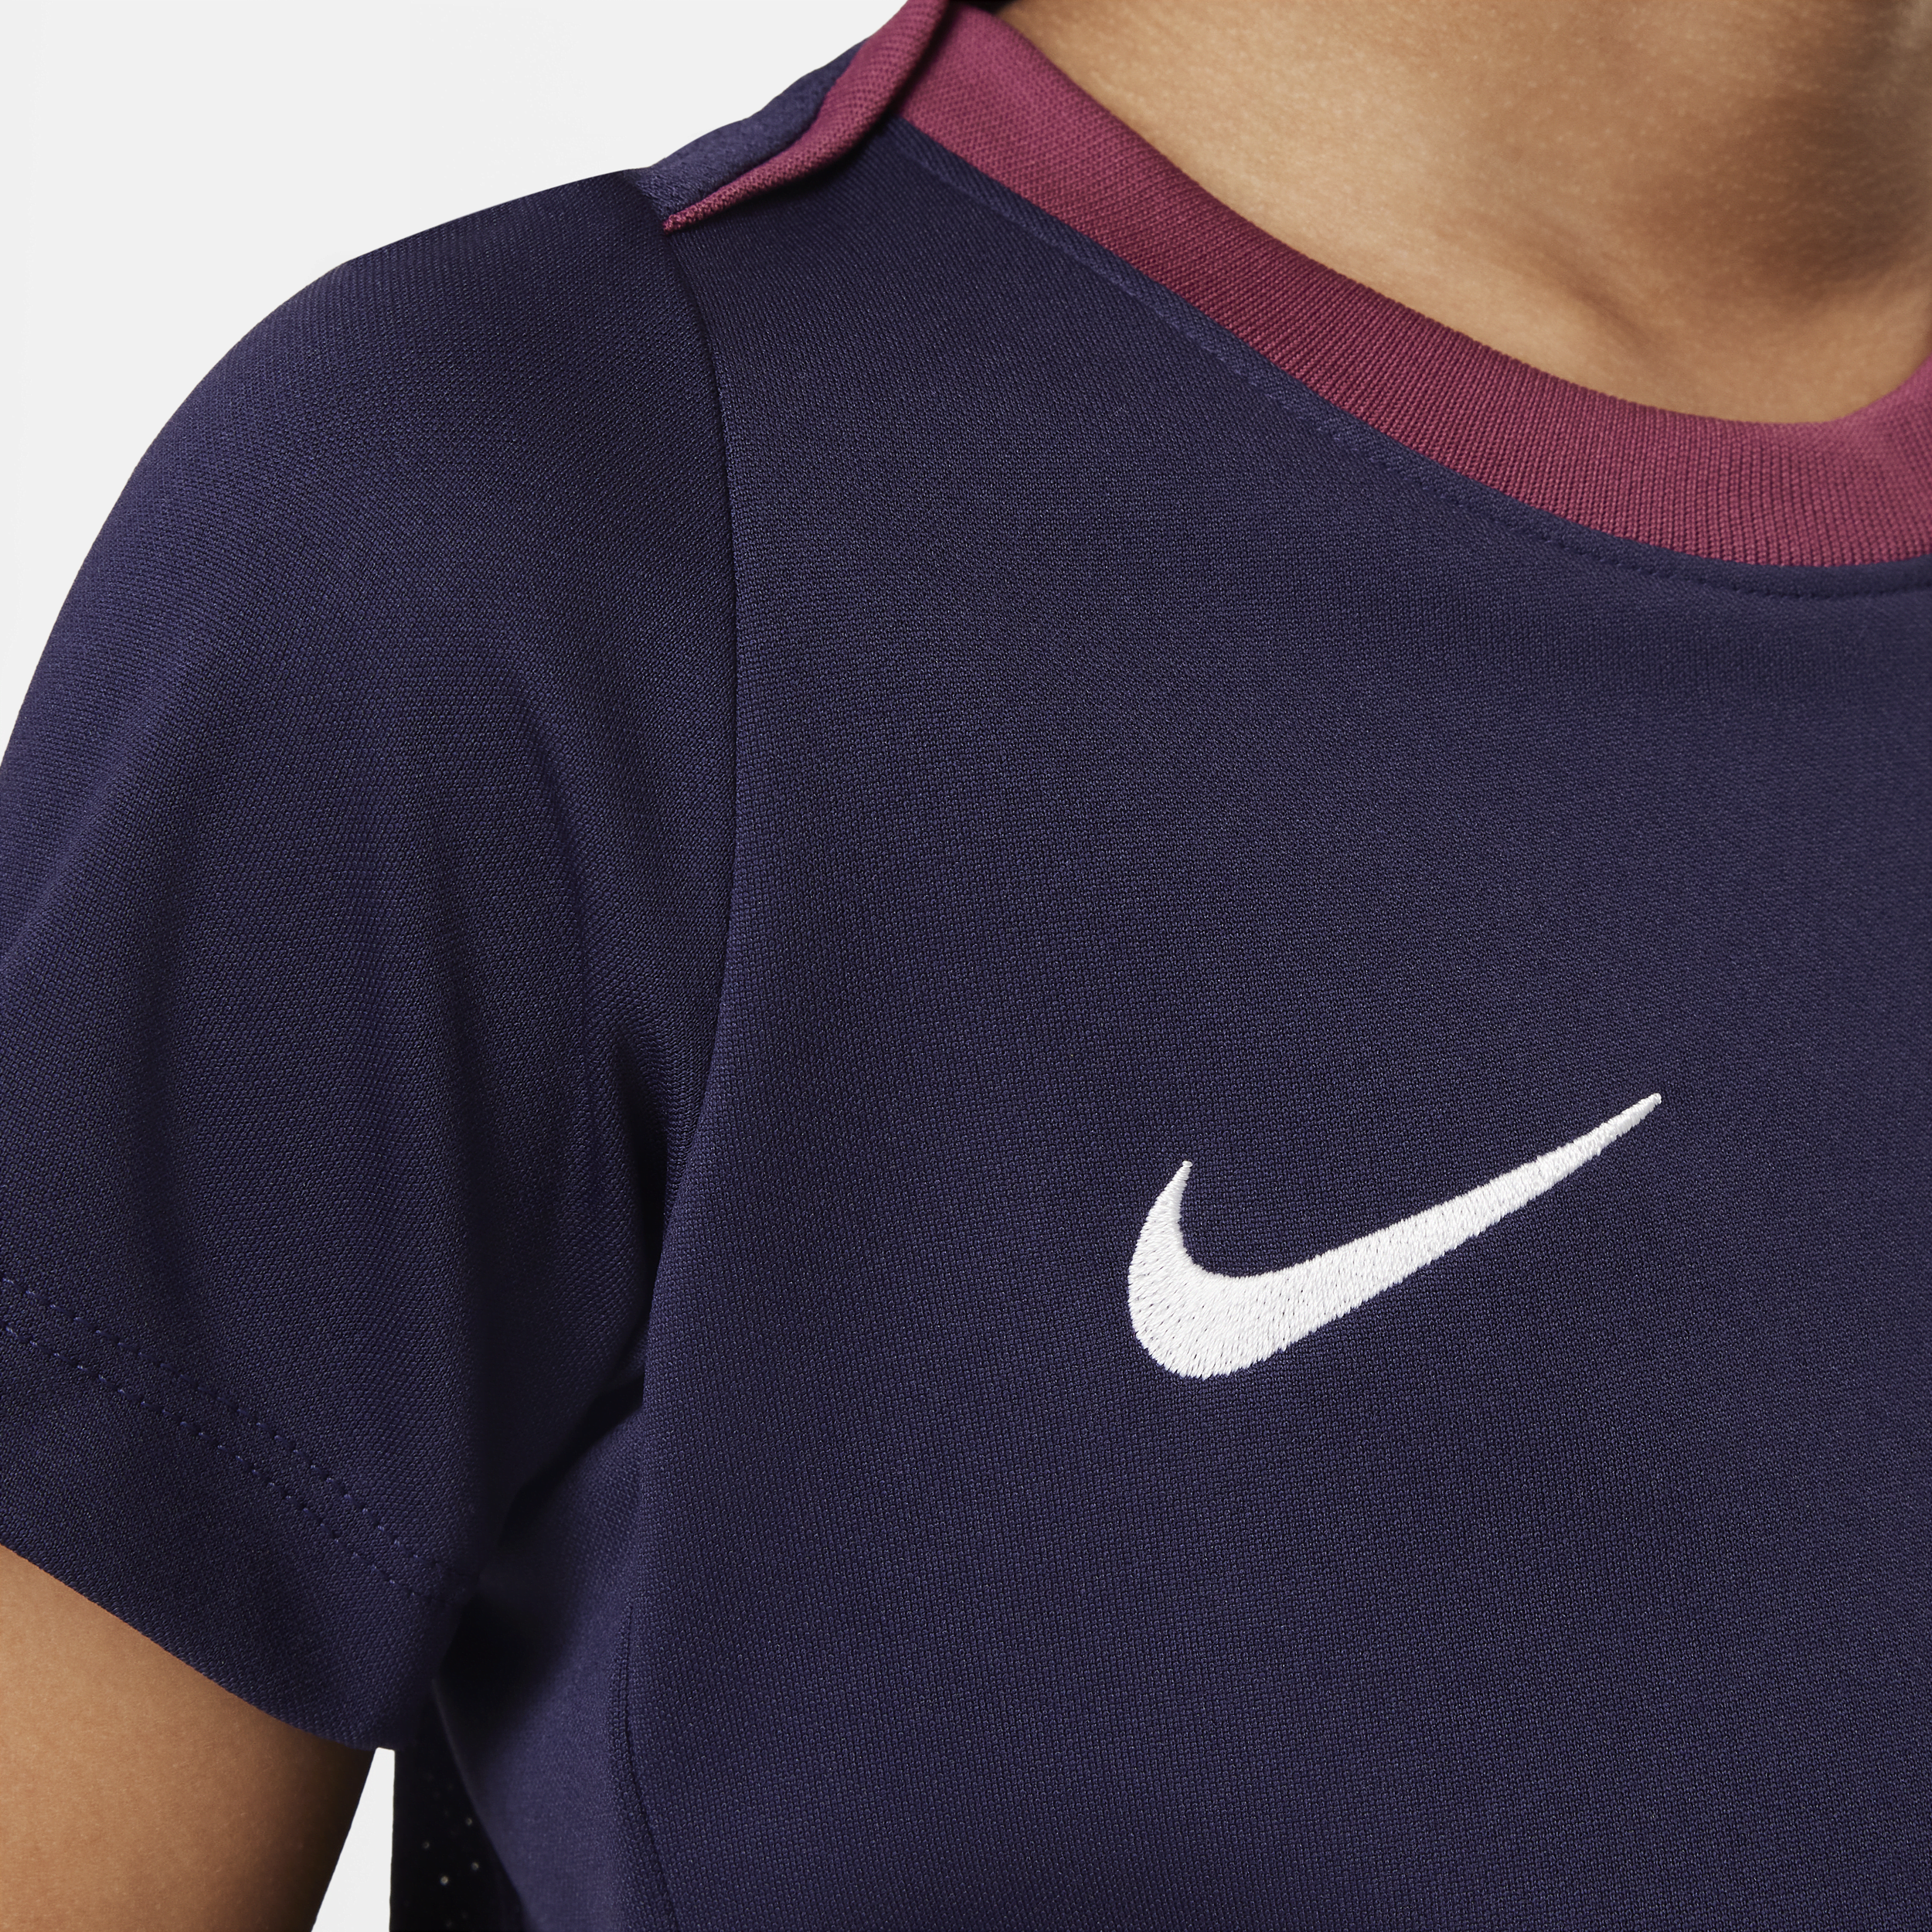 Nike Engeland Academy Pro Dri-FIT voetbaltop met korte mouwen voor kleuters Paars